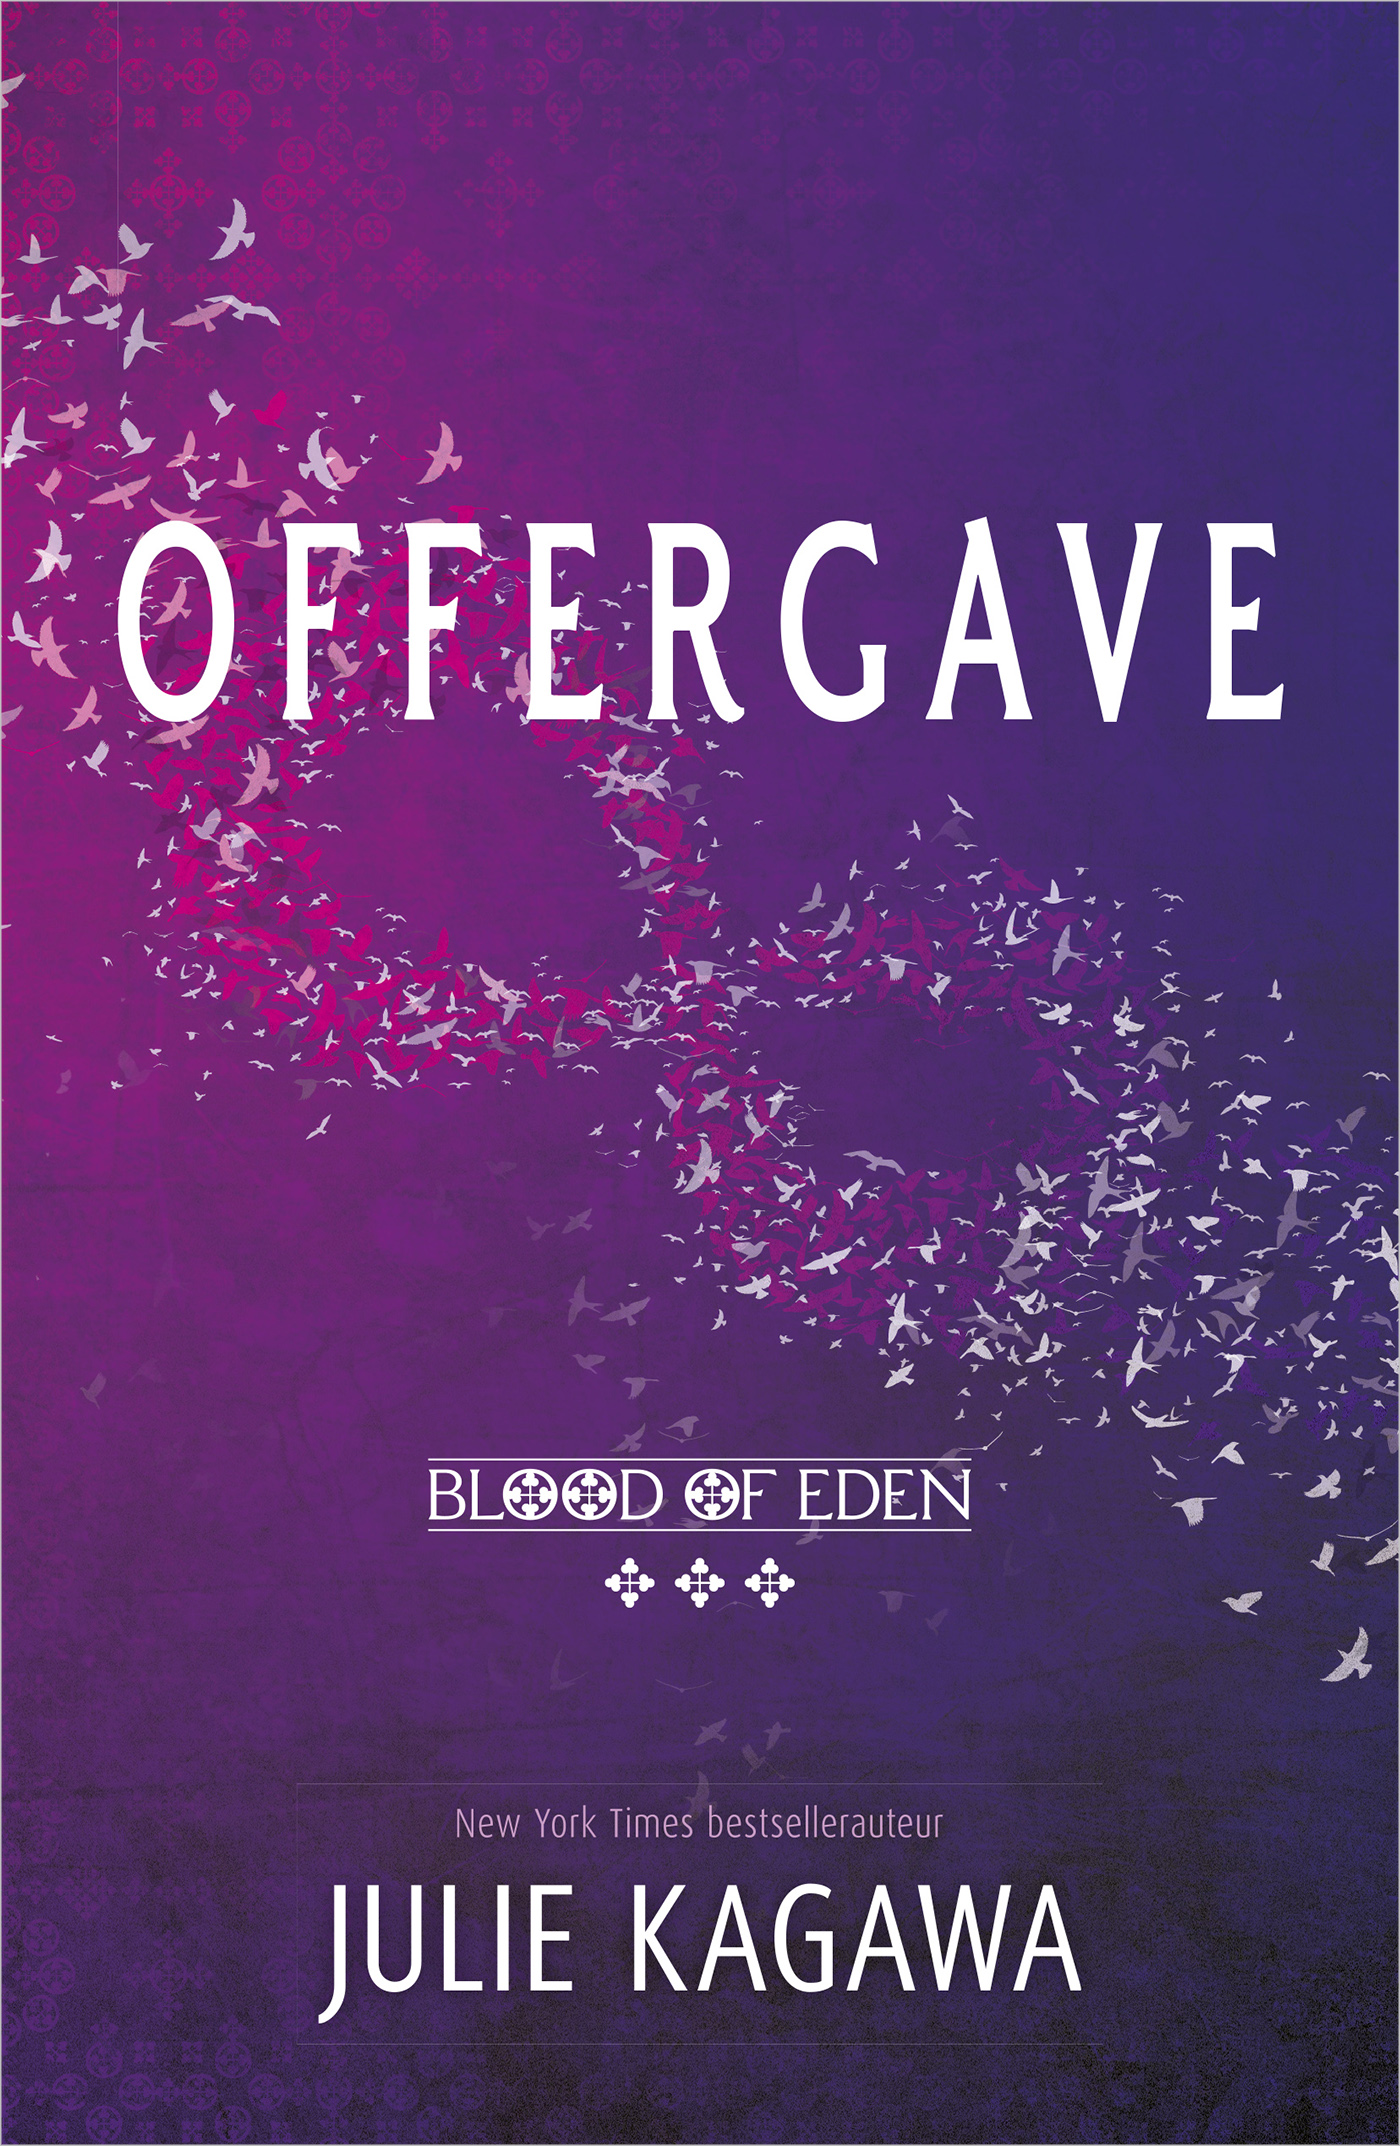 Offergave (Ebook)